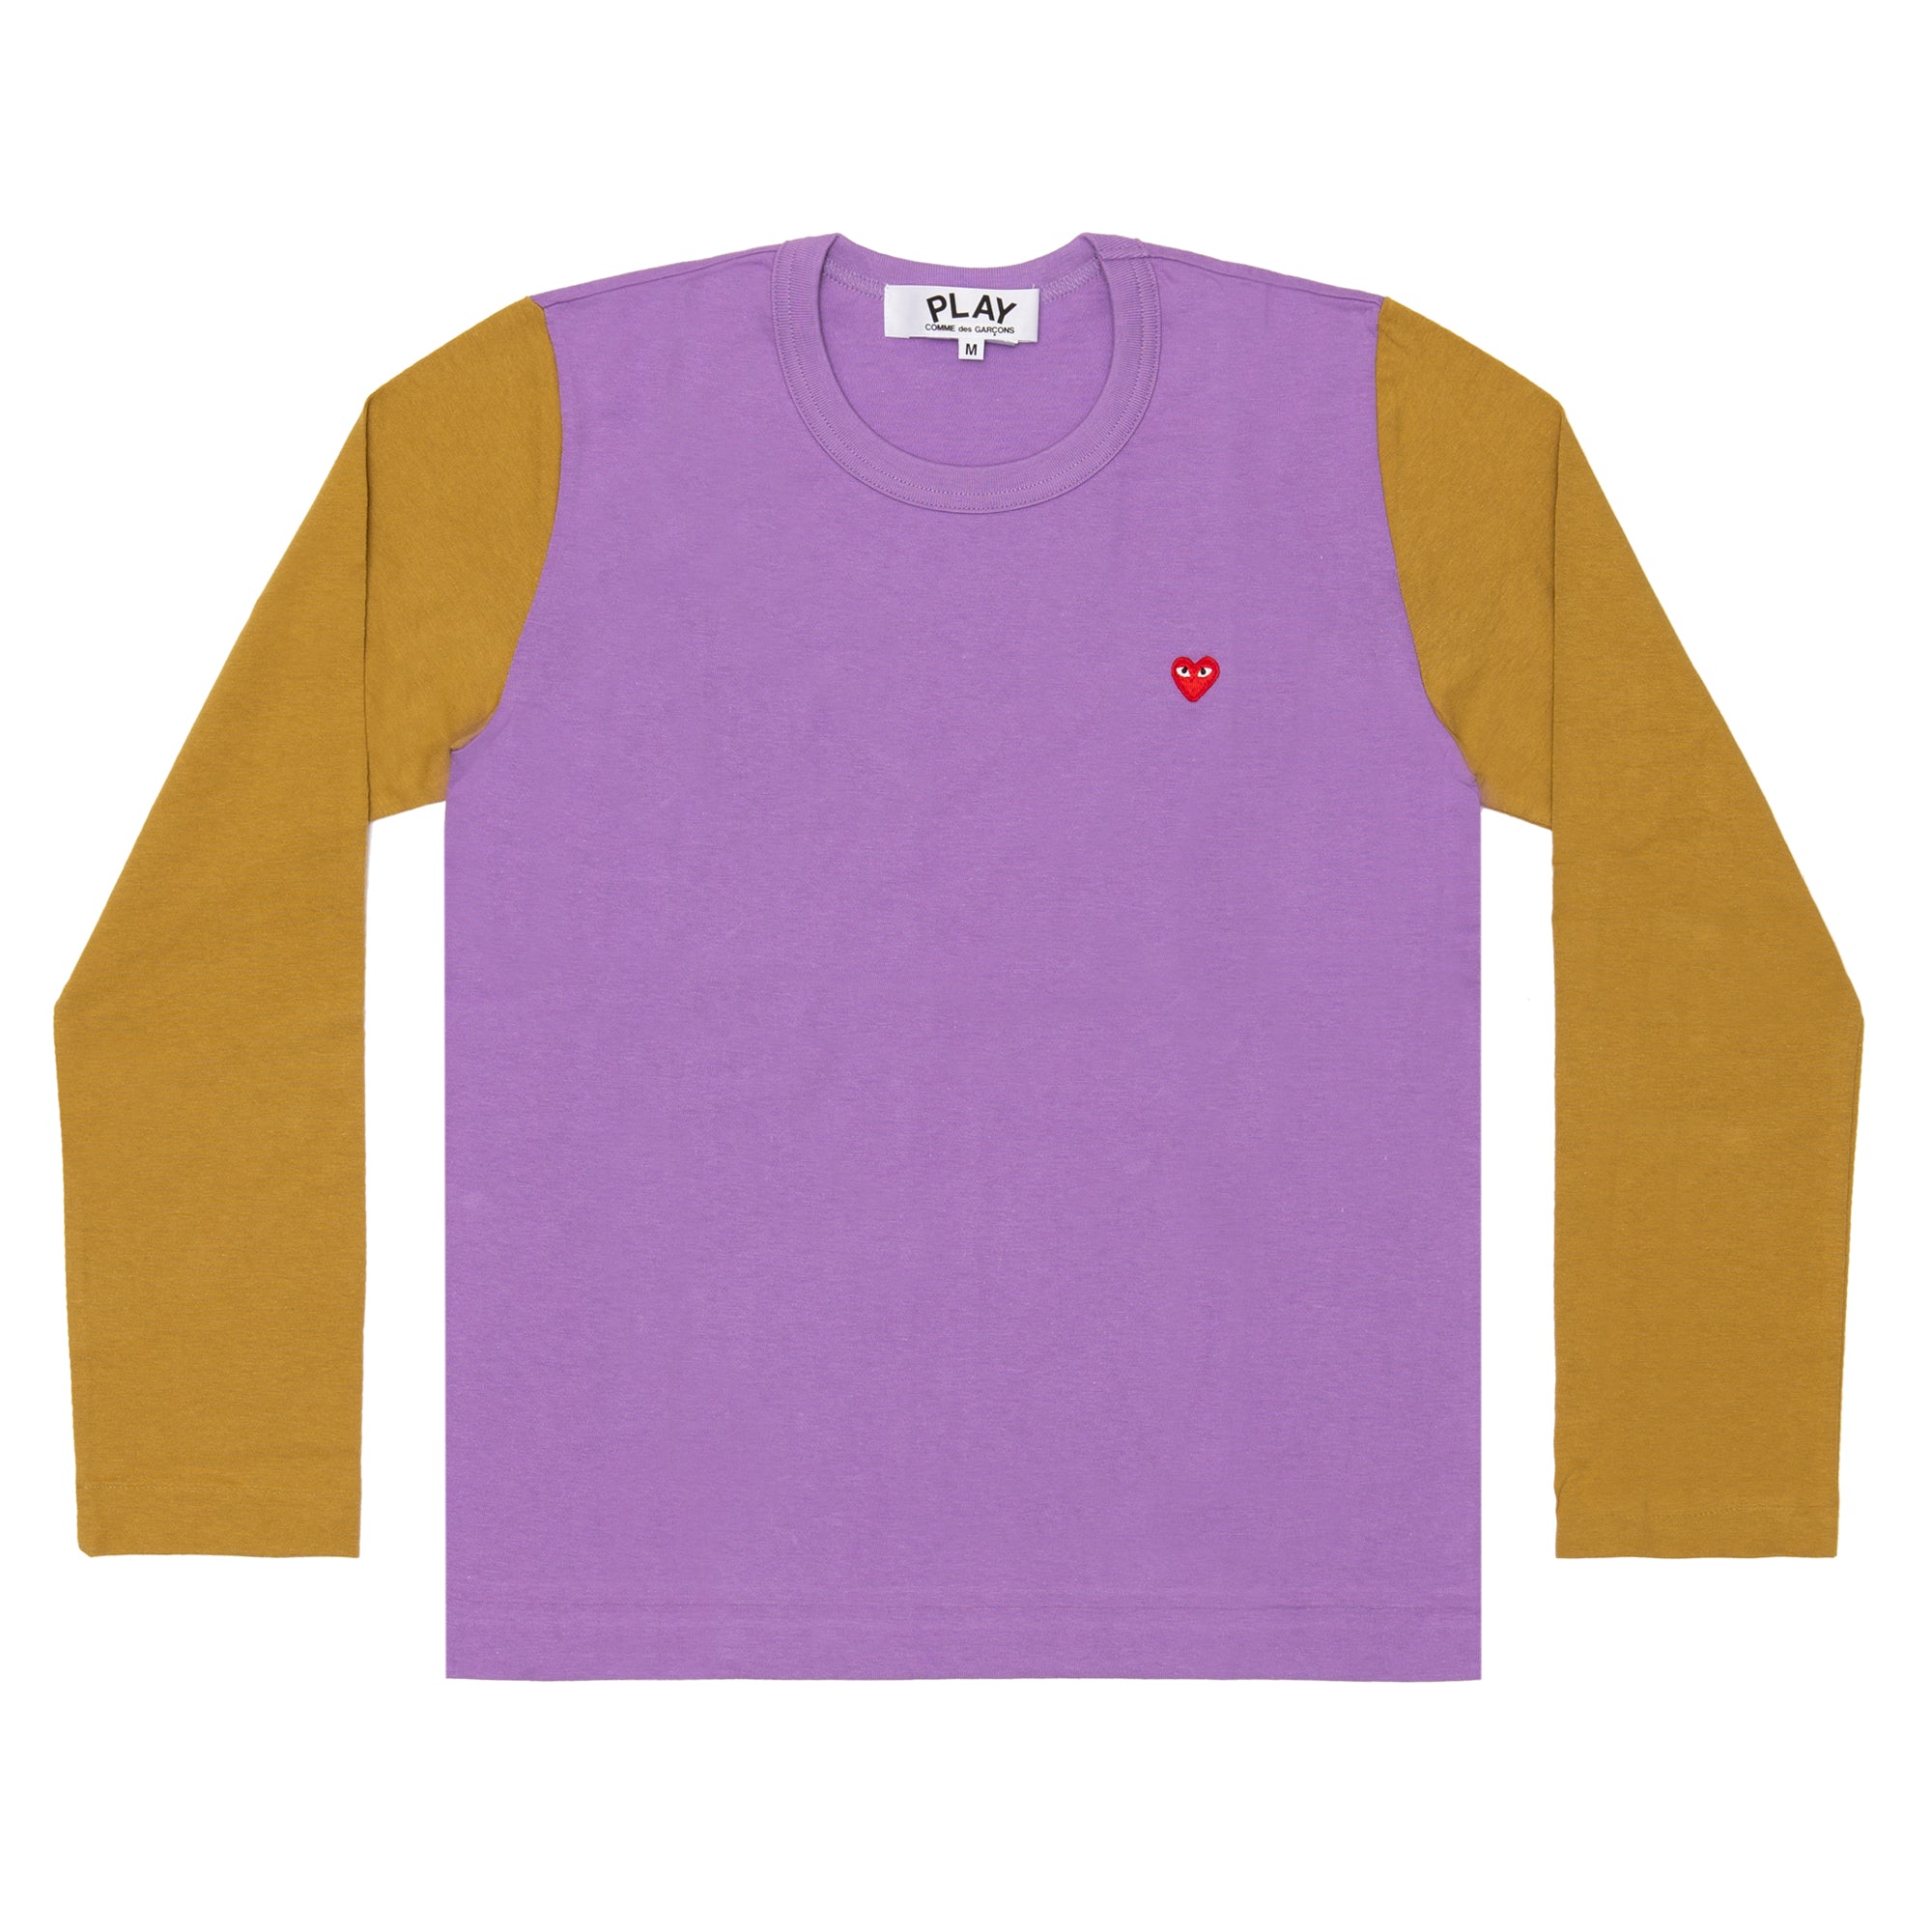 PLAY COMME des GARÇONS Small Red Heart Coloured L/S T-Shirt (Purple X Olive) Ladies: ¥7,920 Men's: ¥8,360